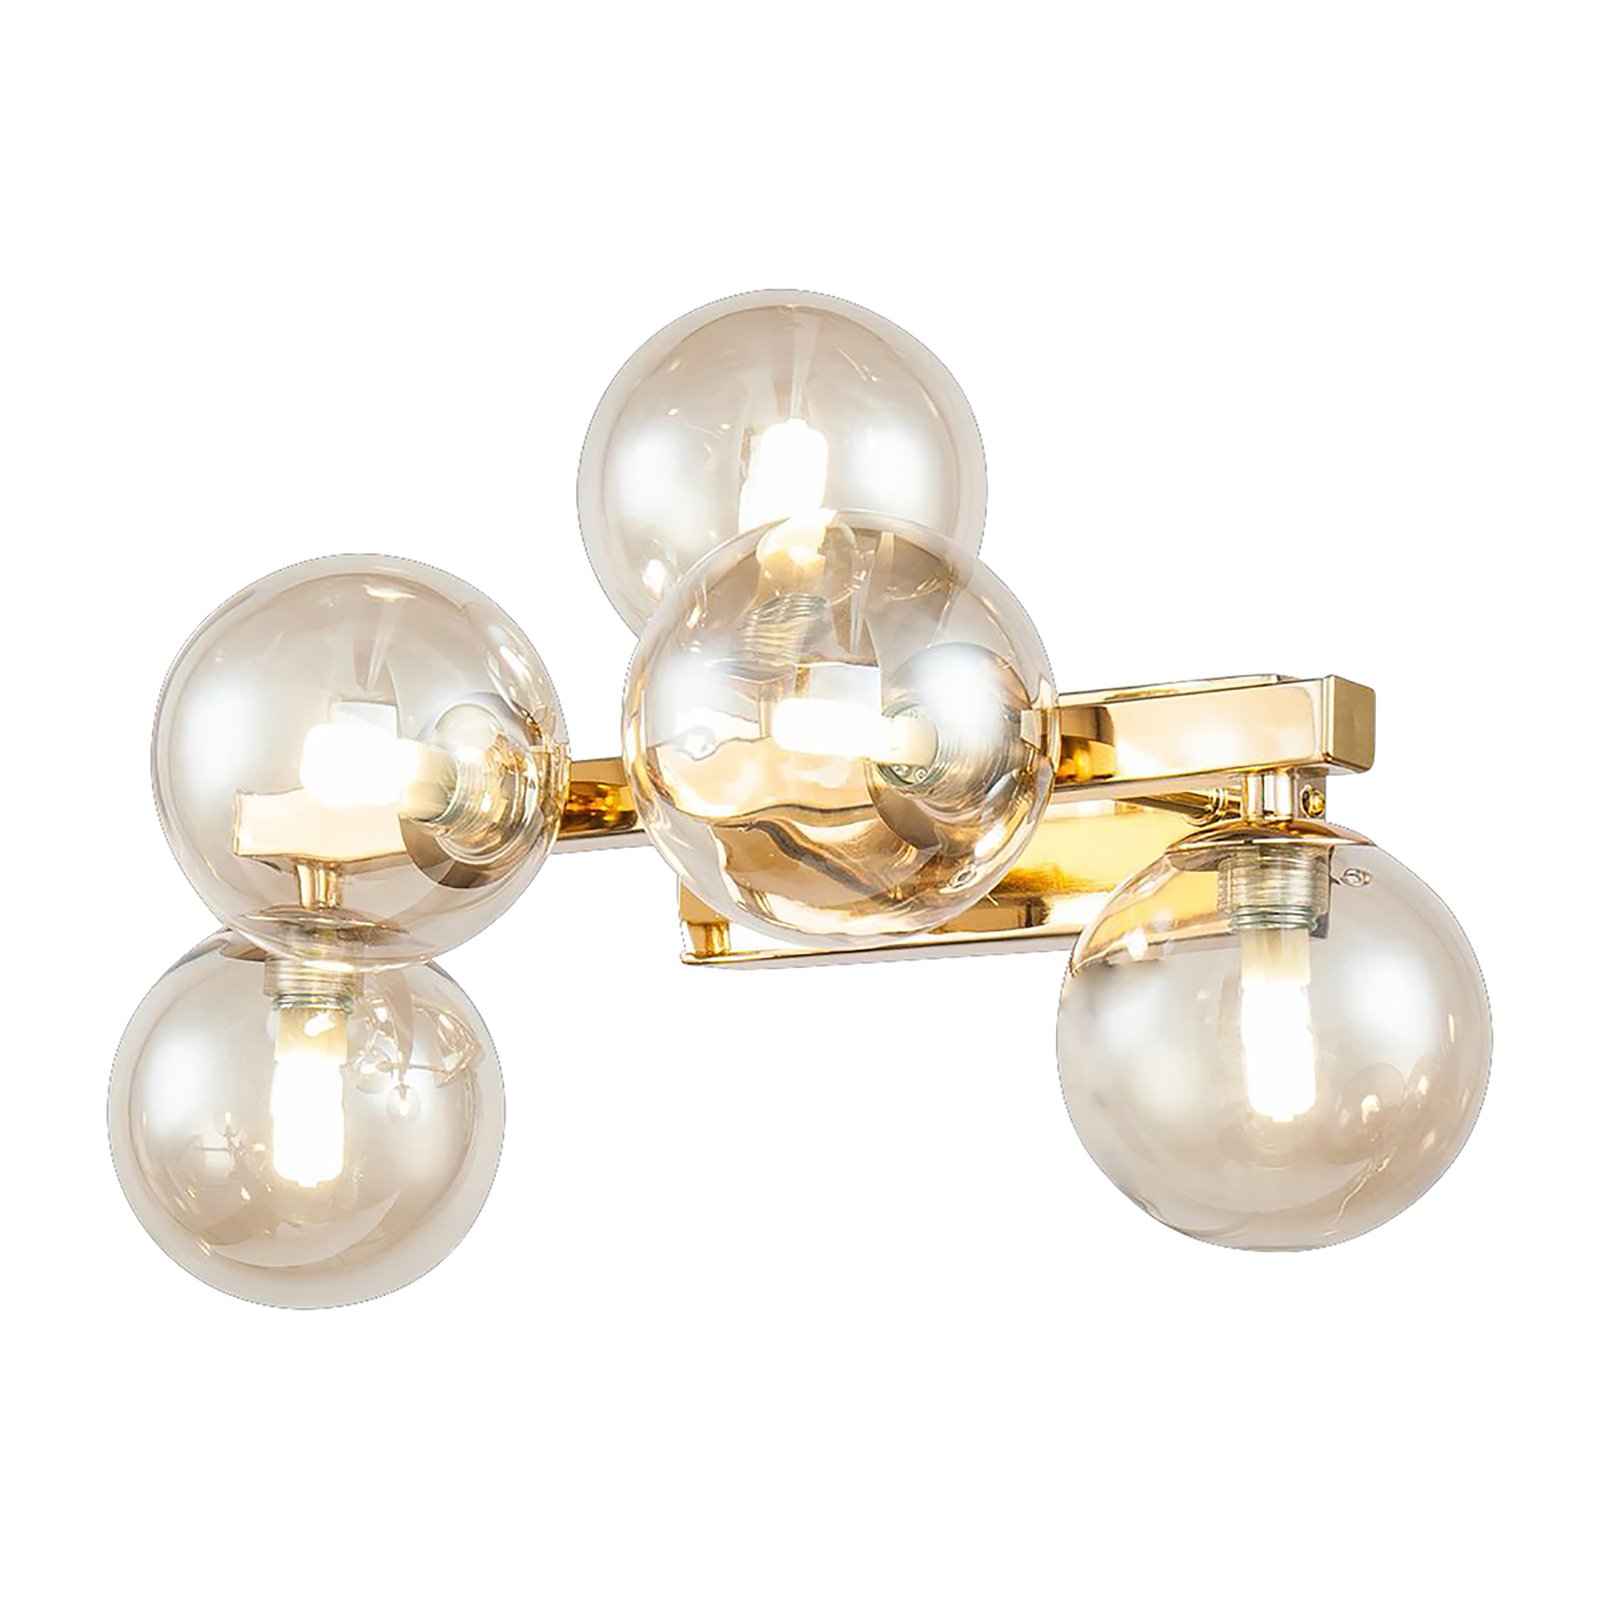 Maytoni Dallas aplique con 5 esferas de vidrio oro